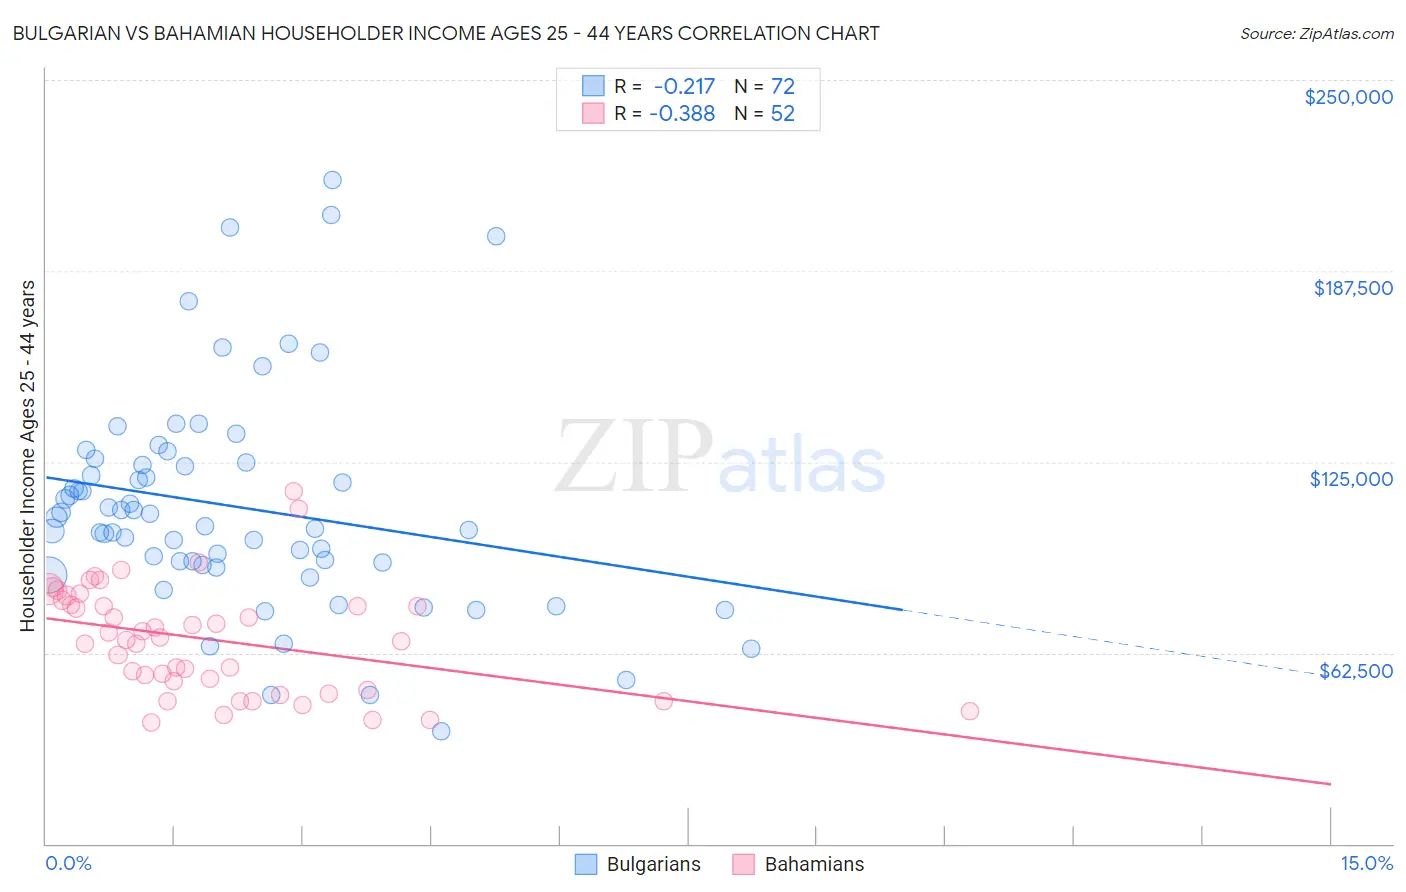 Bulgarian vs Bahamian Householder Income Ages 25 - 44 years